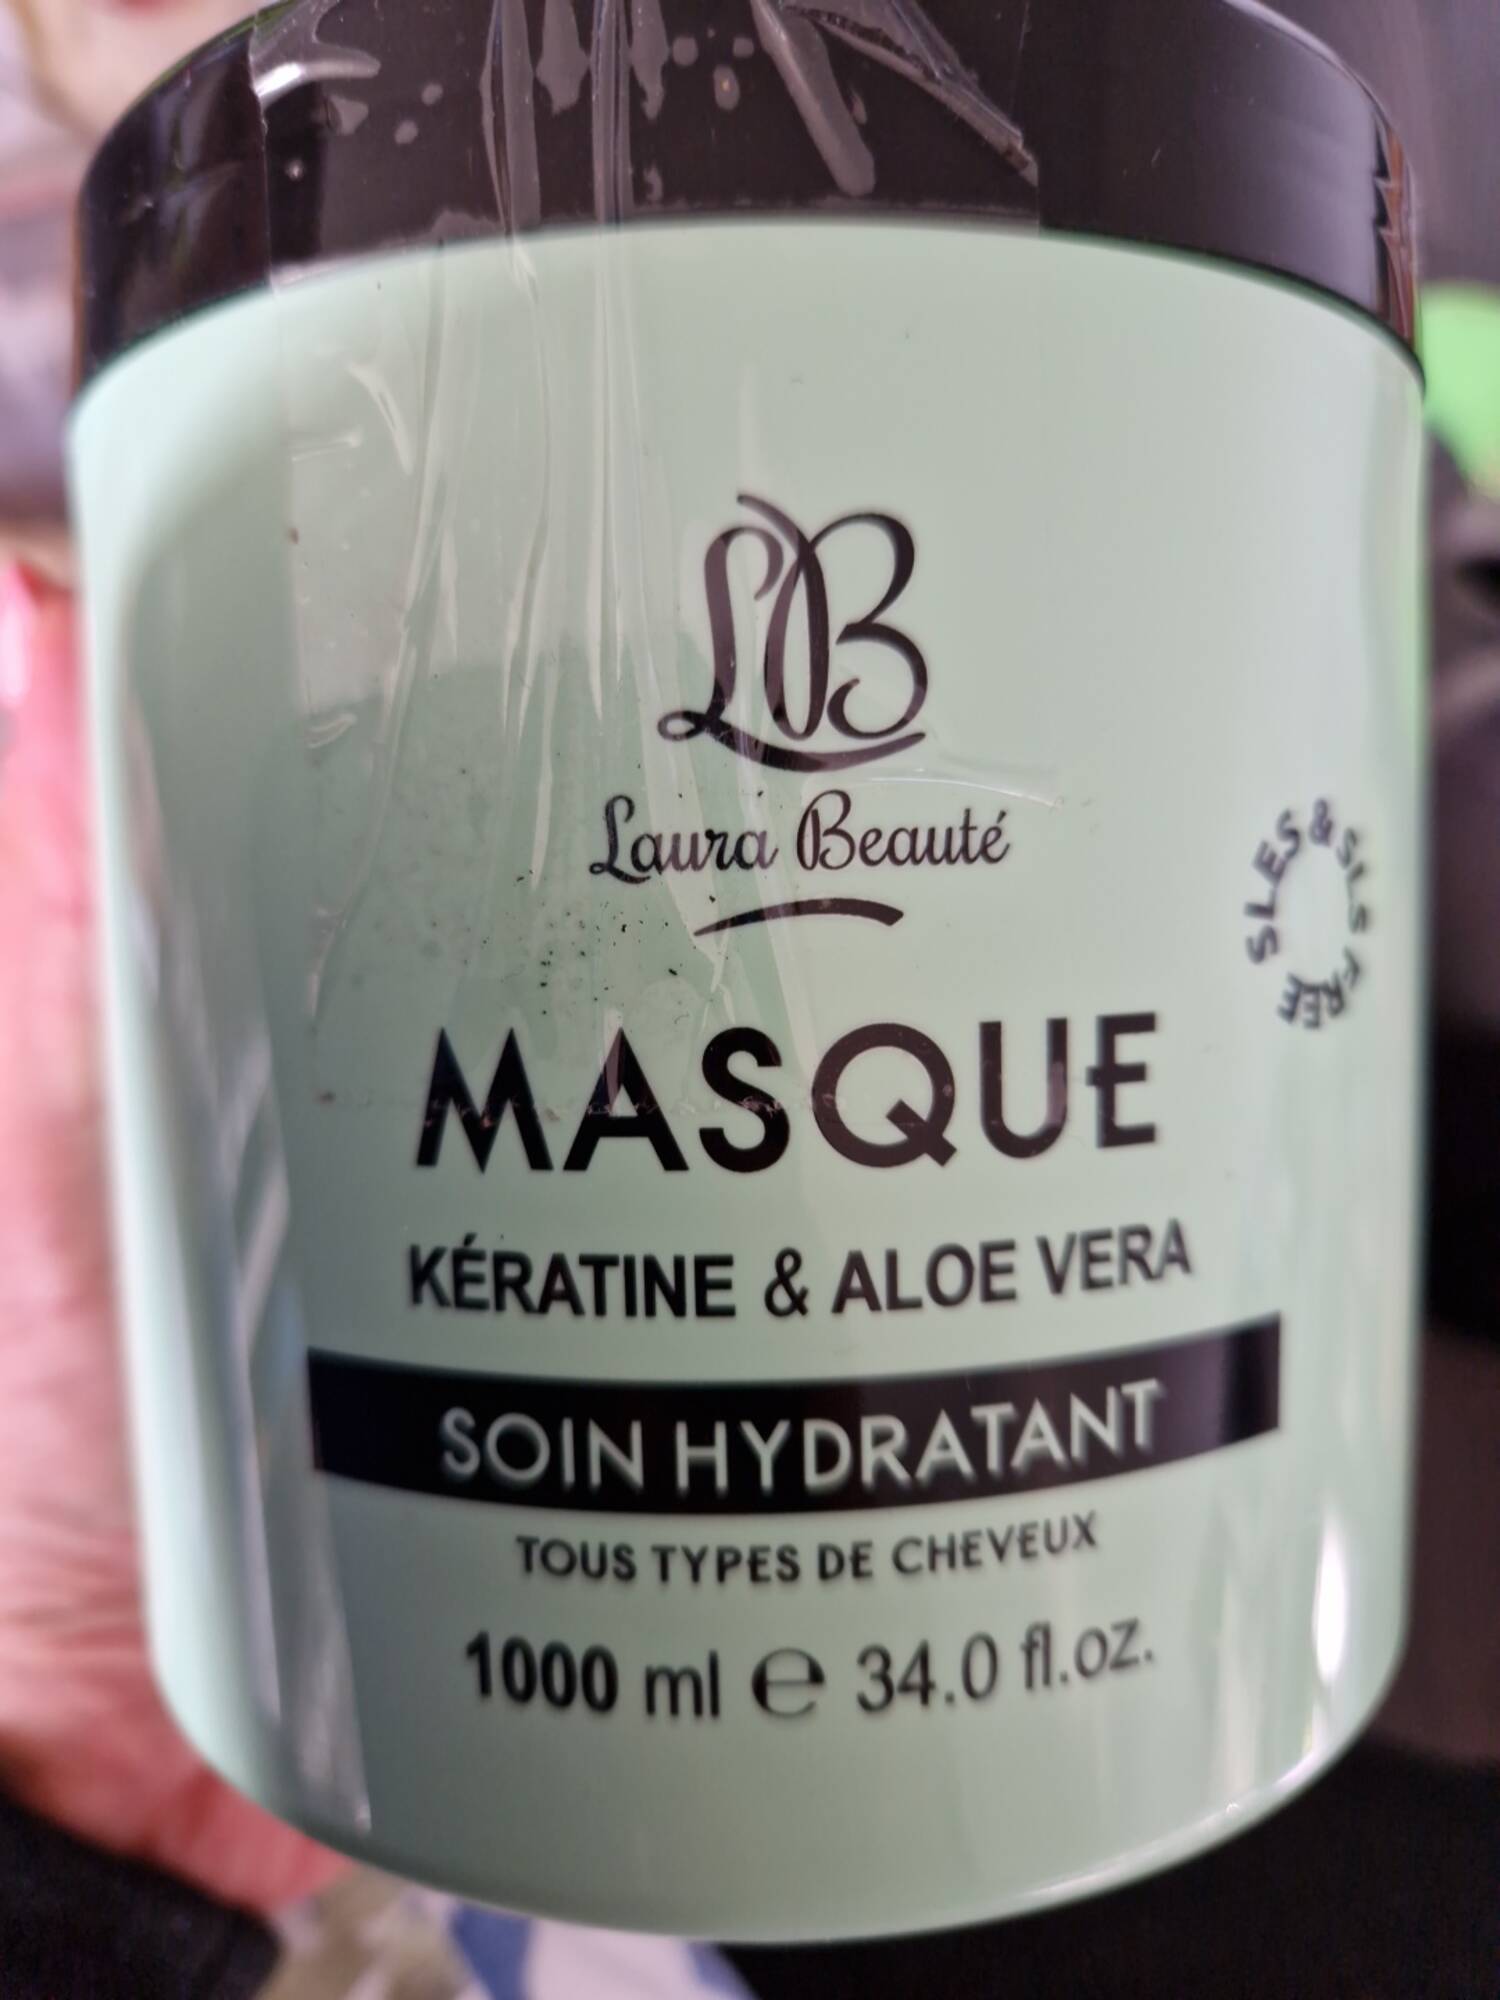 LAURA BEAUTÉ - Soin hydratant - Masque kératine et aloe vera